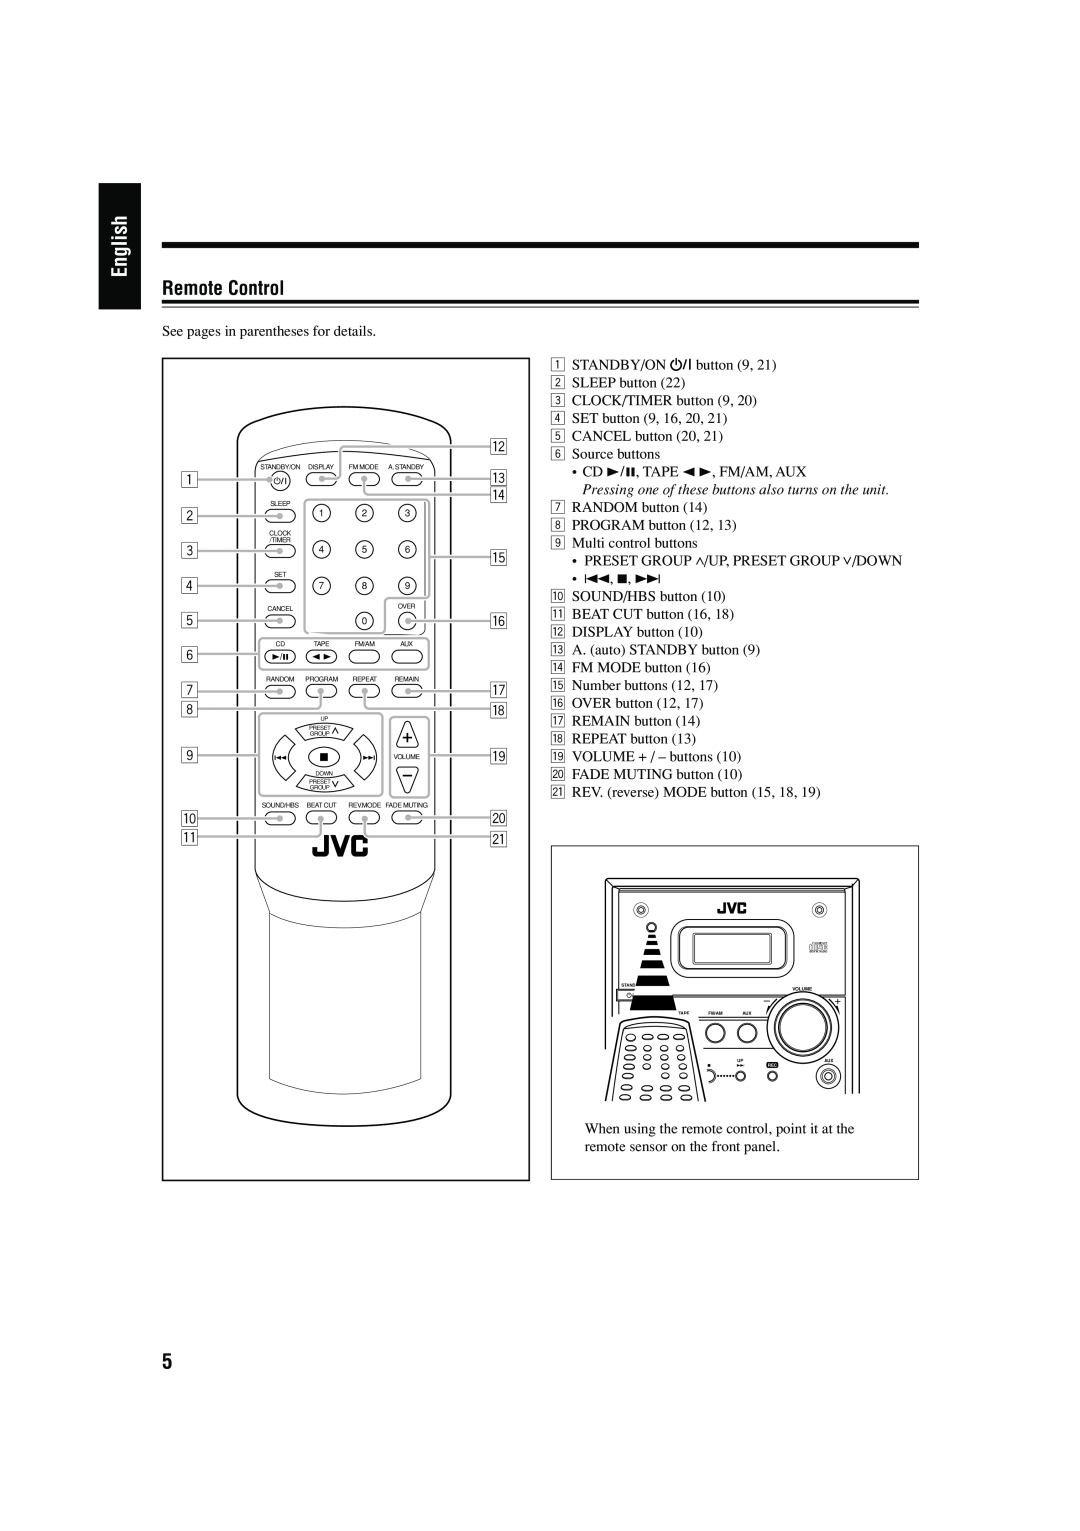 JVC LVT1364-006B manual English, Remote Control, Over 